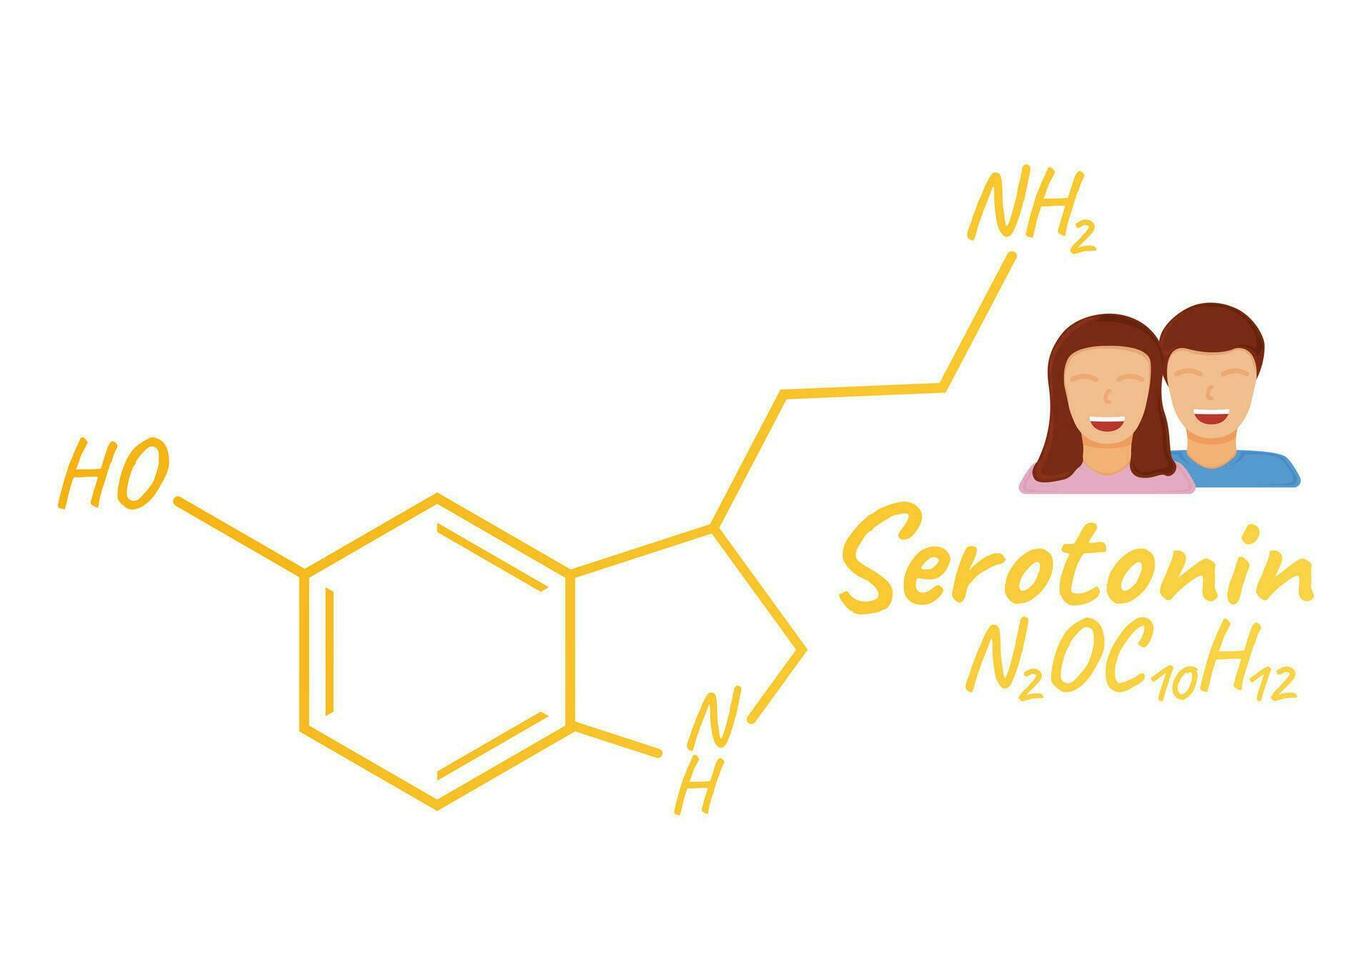 humano hormônio serotonina conceito químico esquelético Fórmula ícone rótulo, texto Fonte vetor ilustração, isolado em branco. periódico elemento mesa.